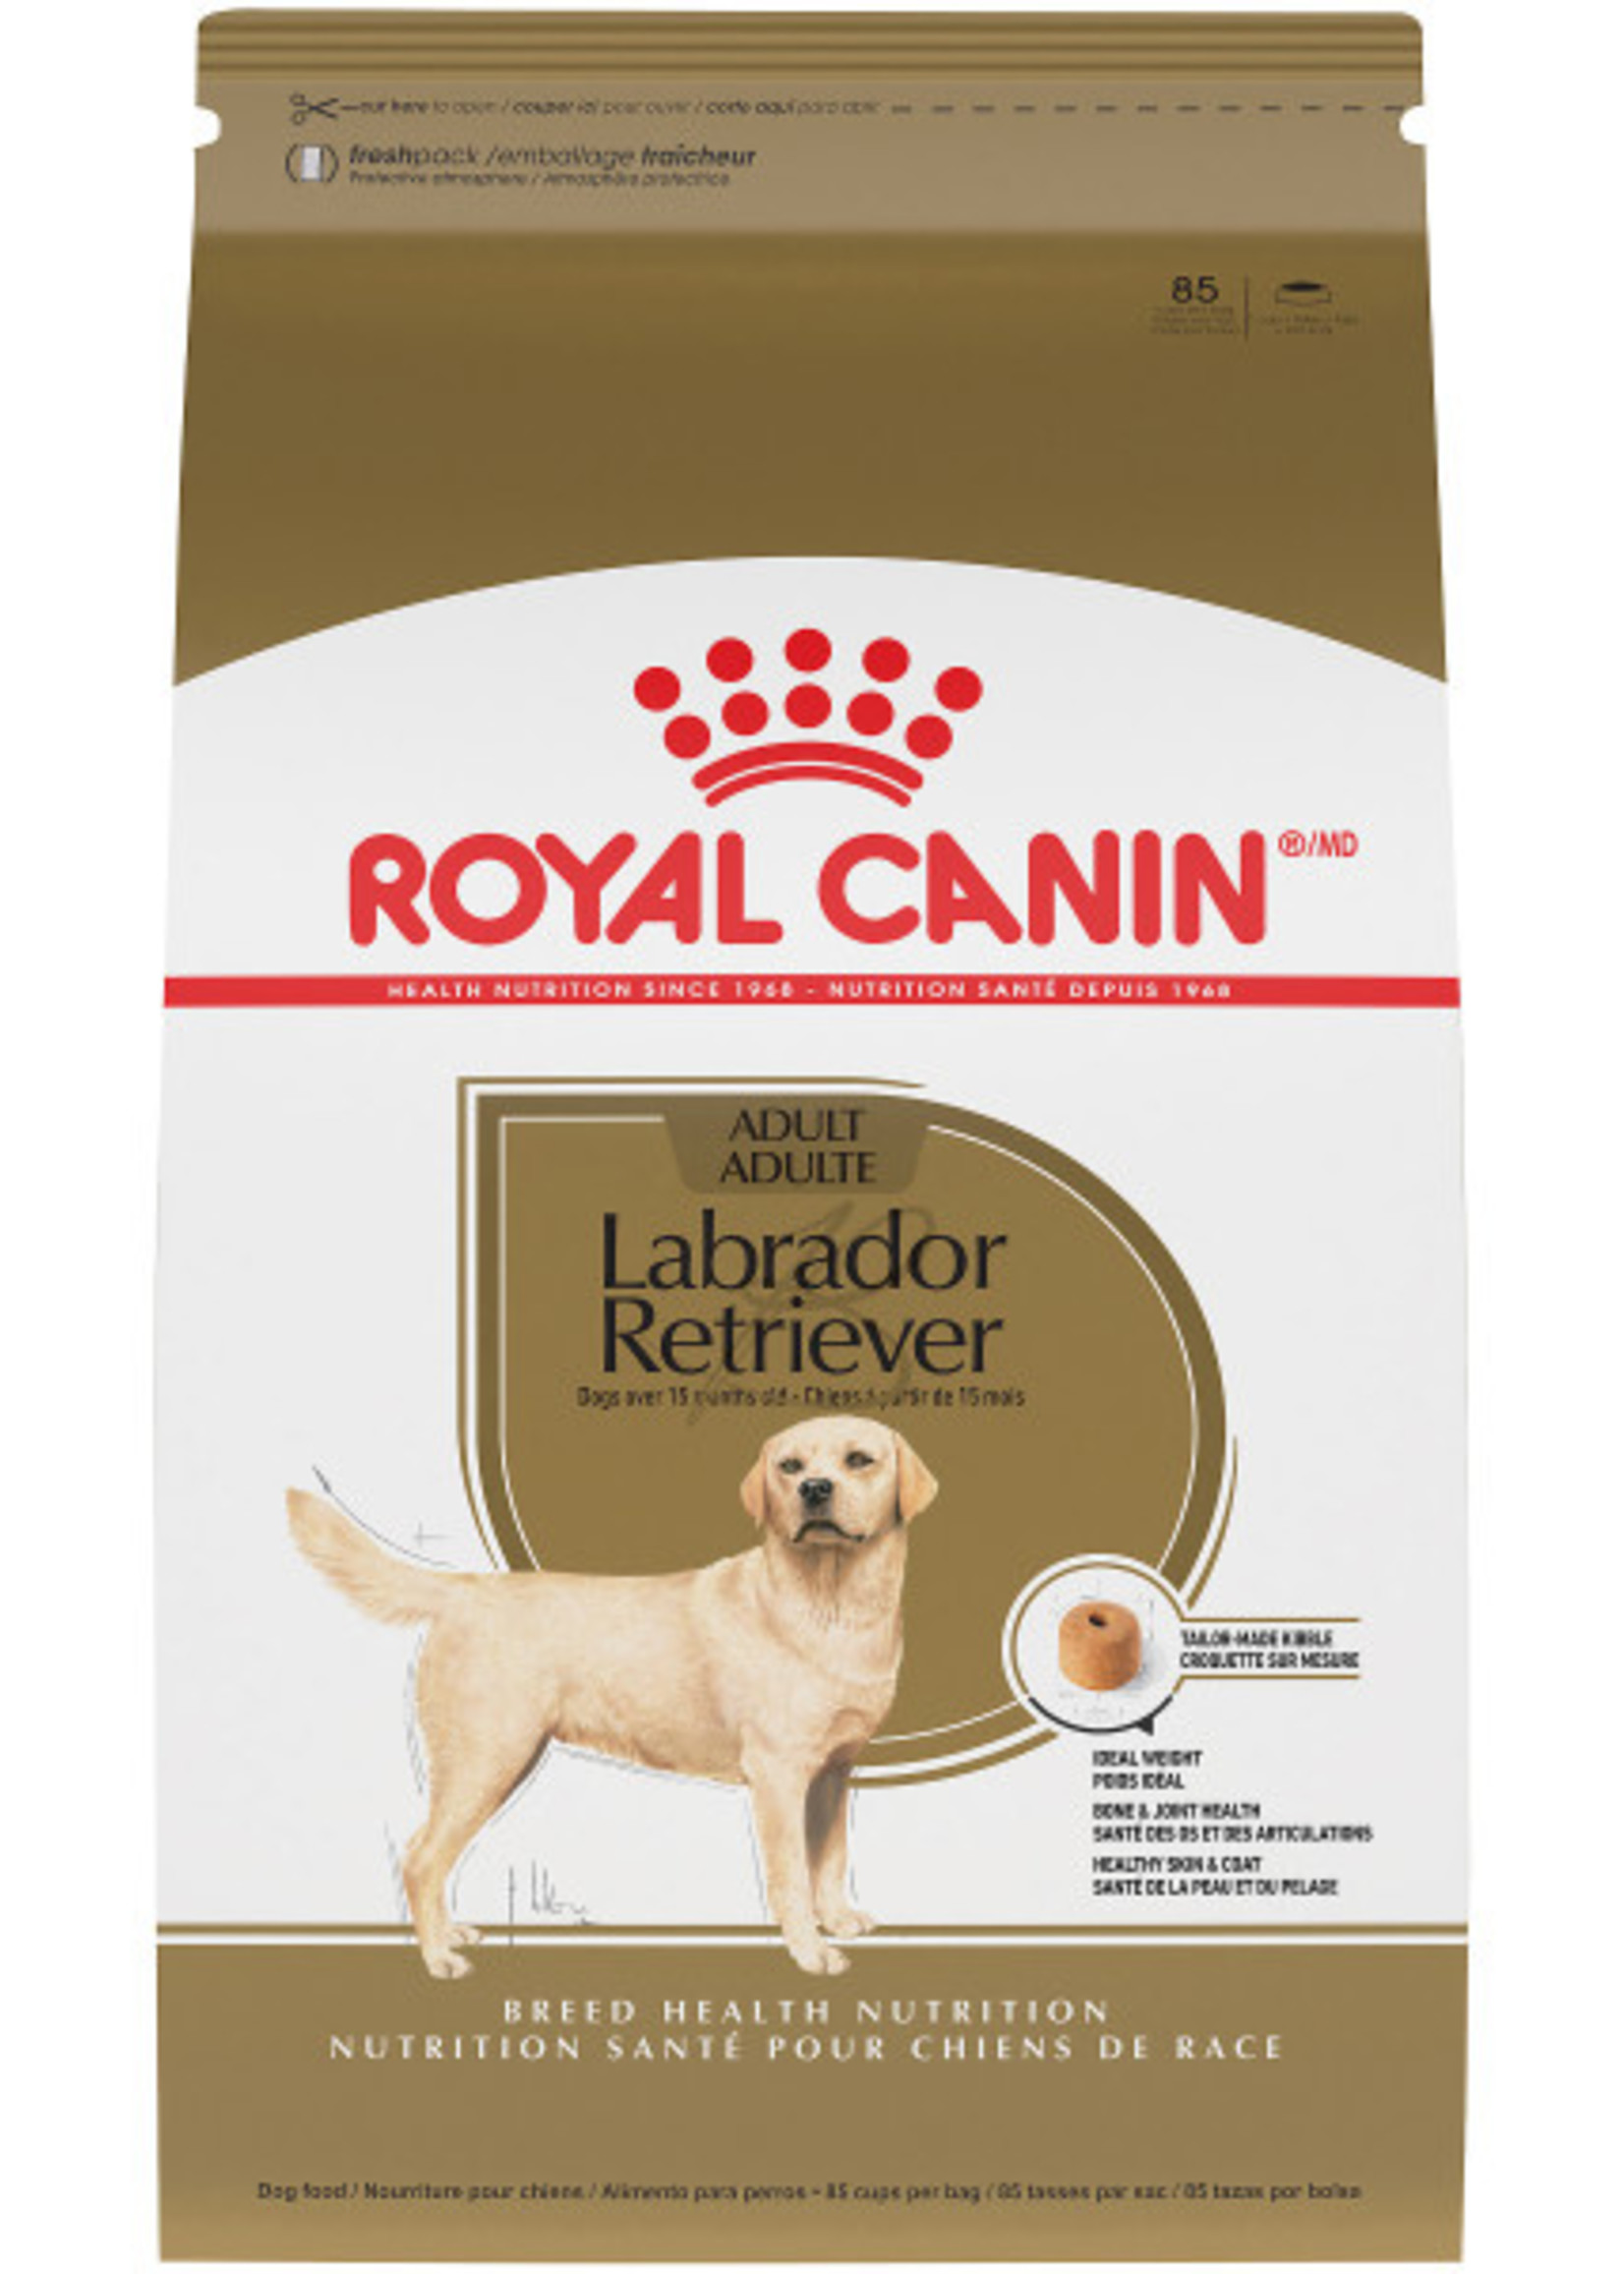 Royal Canin® Royal Canin Labrador Retriever Adult 27lb